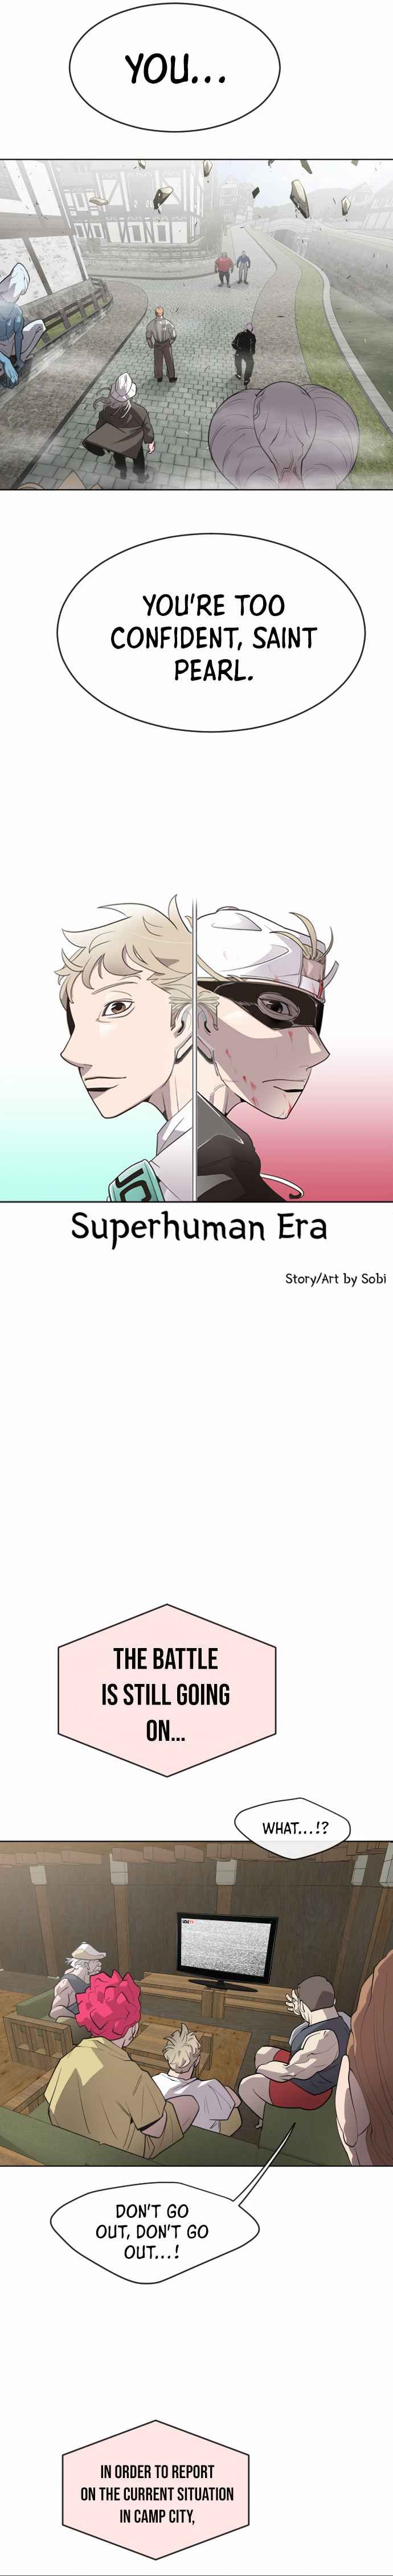 Superhuman Era Chapter 53 page 4